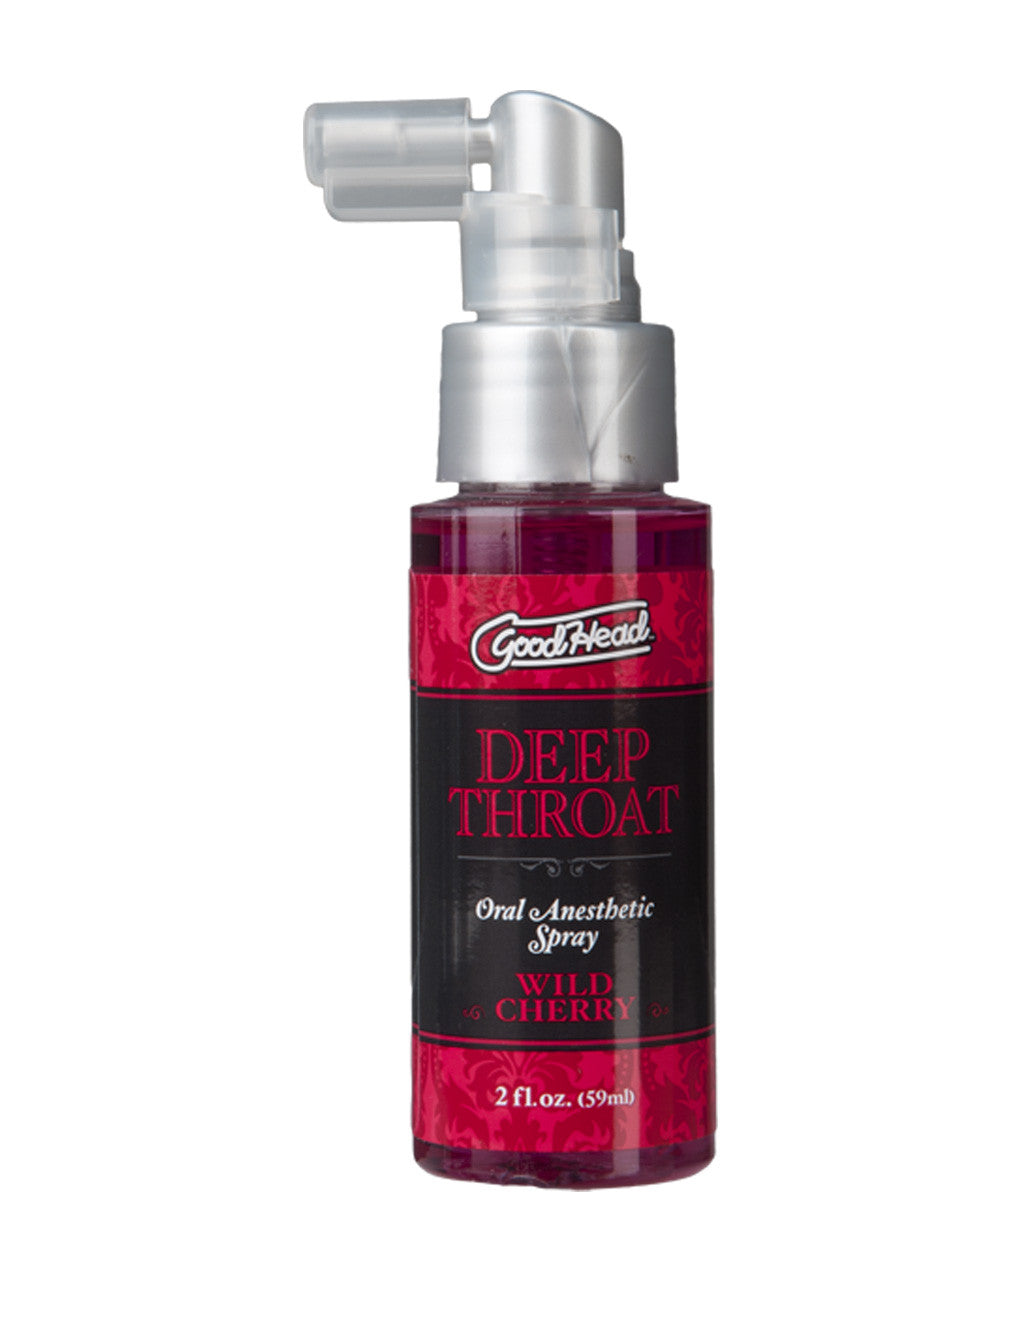 Goodhead Deep Throat Desensitizing Spray Cherry - Personal Care - Enhancement